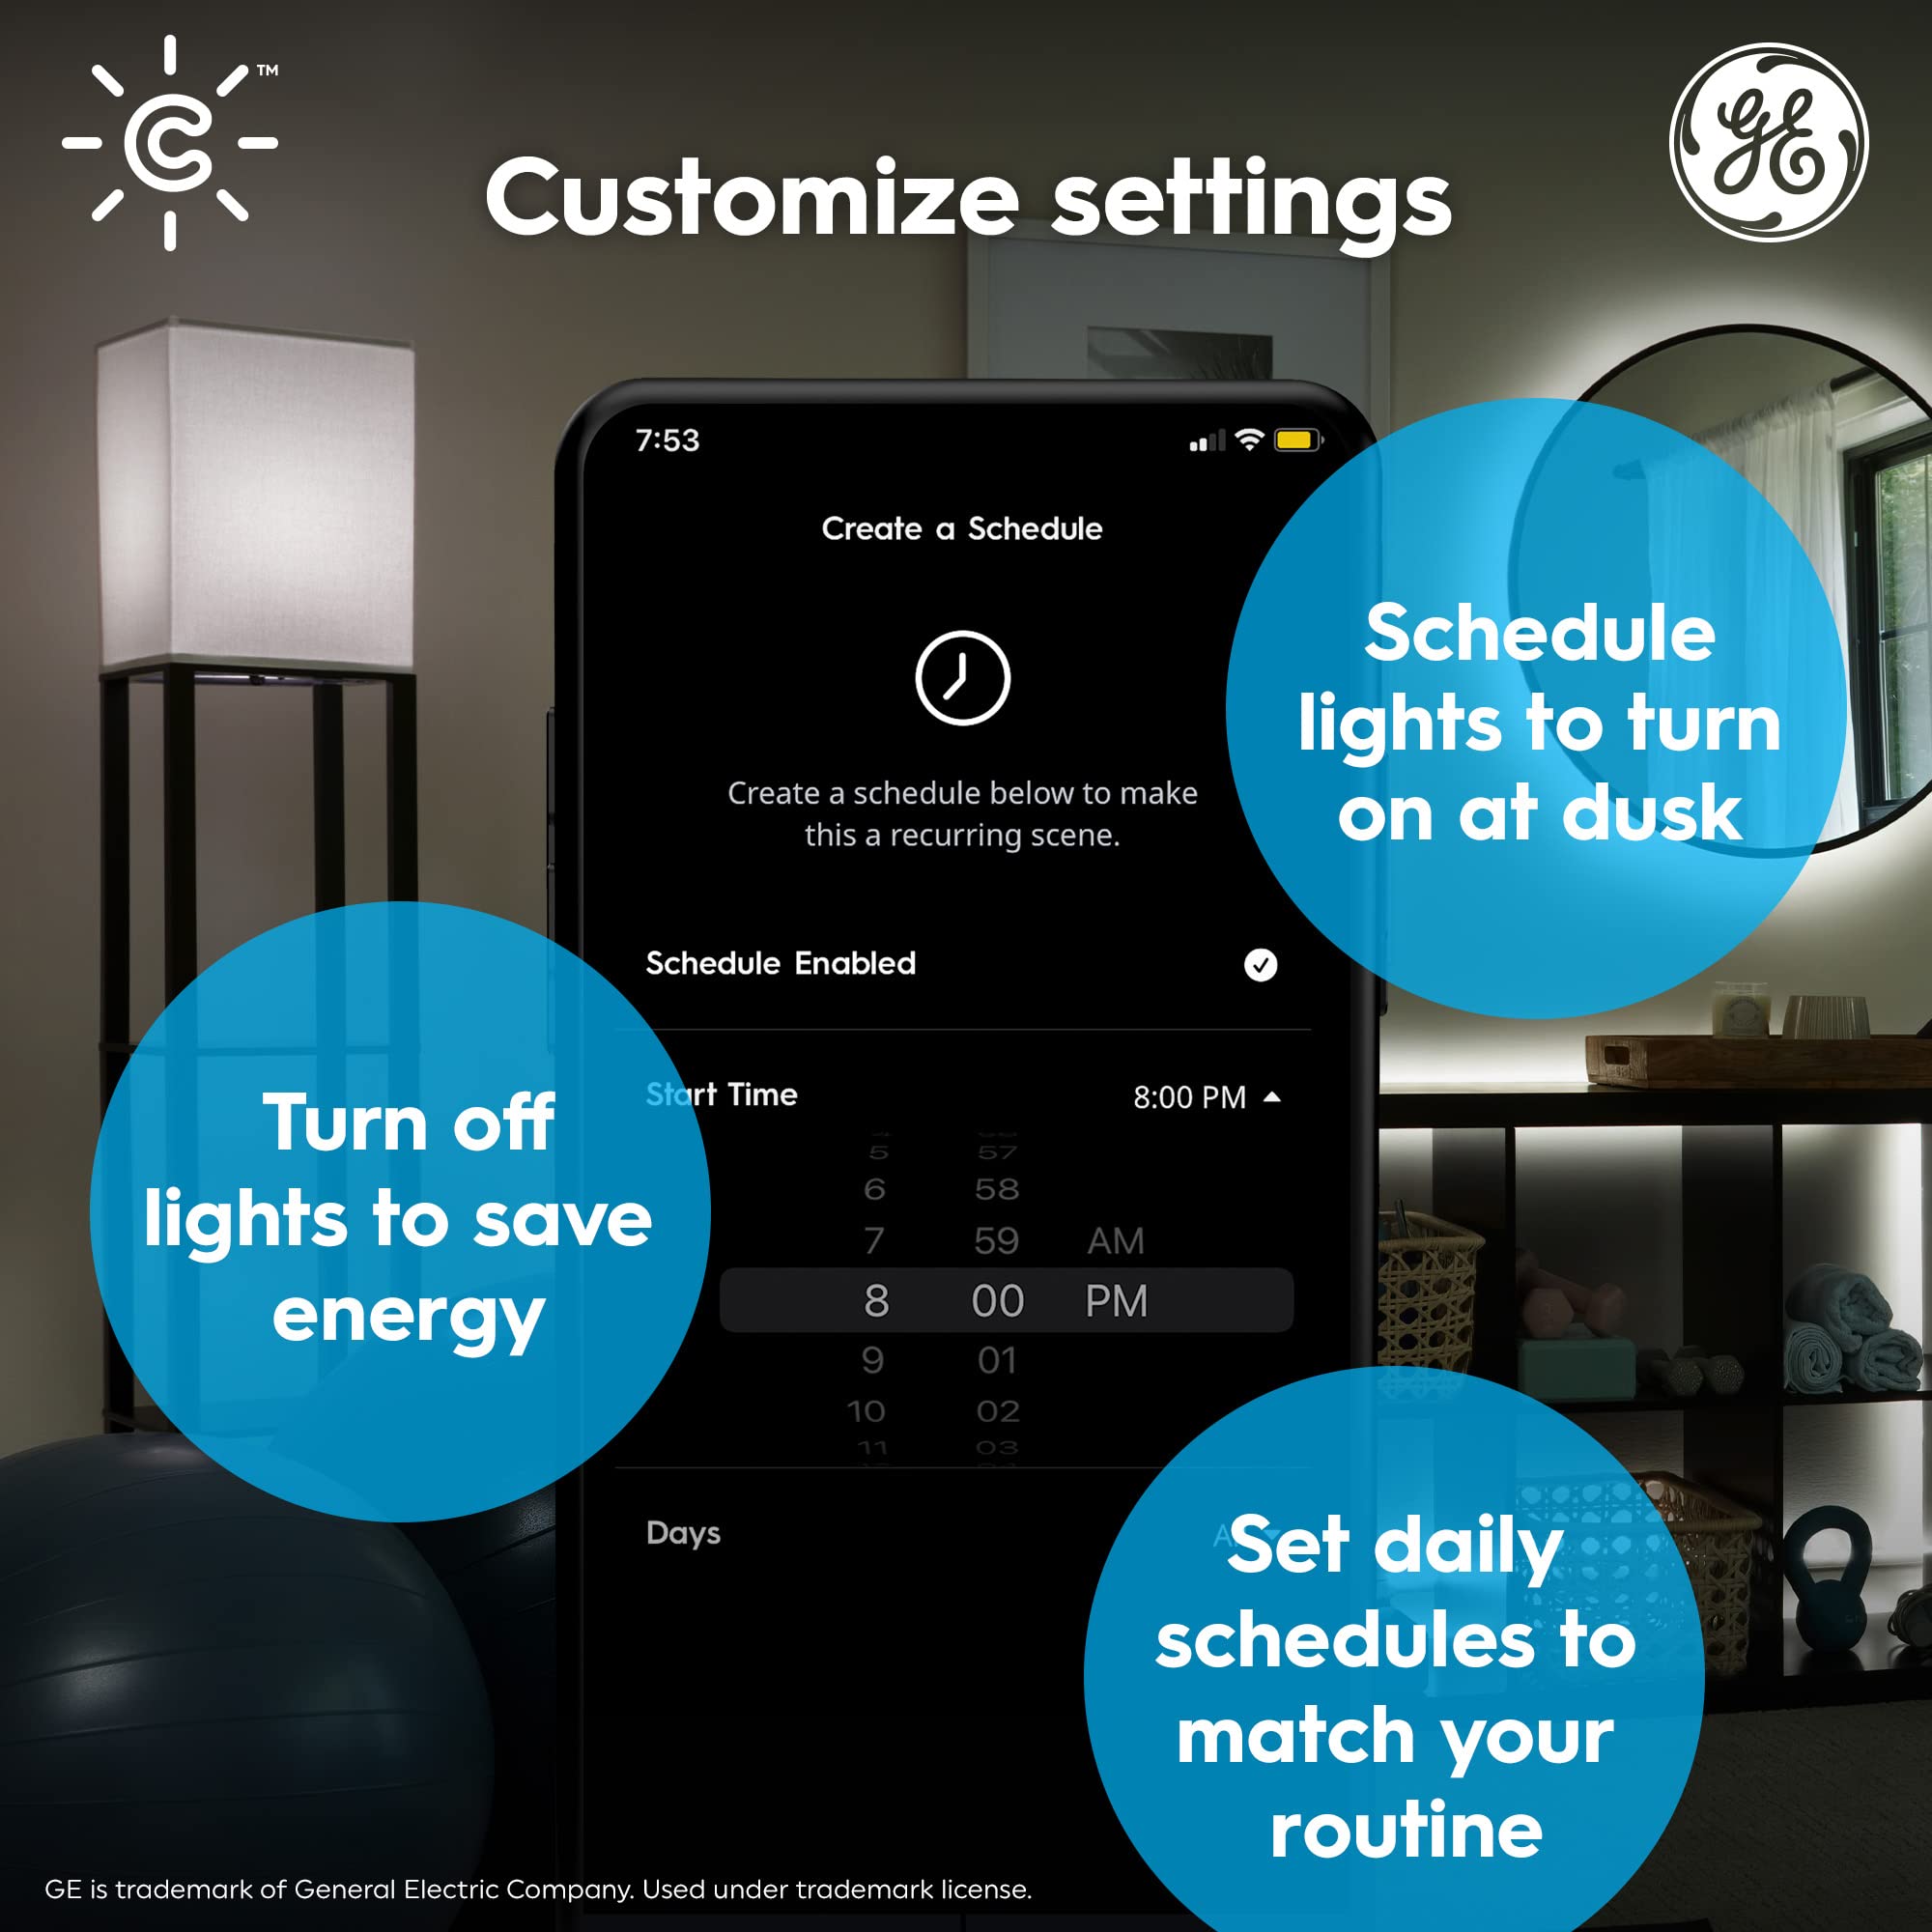 GE Lighting CYNC Smart LED Light Bulbs, Soft White, Bluetooth and Wi-Fi, Works with Alexa and Google Home, Decorative Bulbs, Small Base (4 Pack)